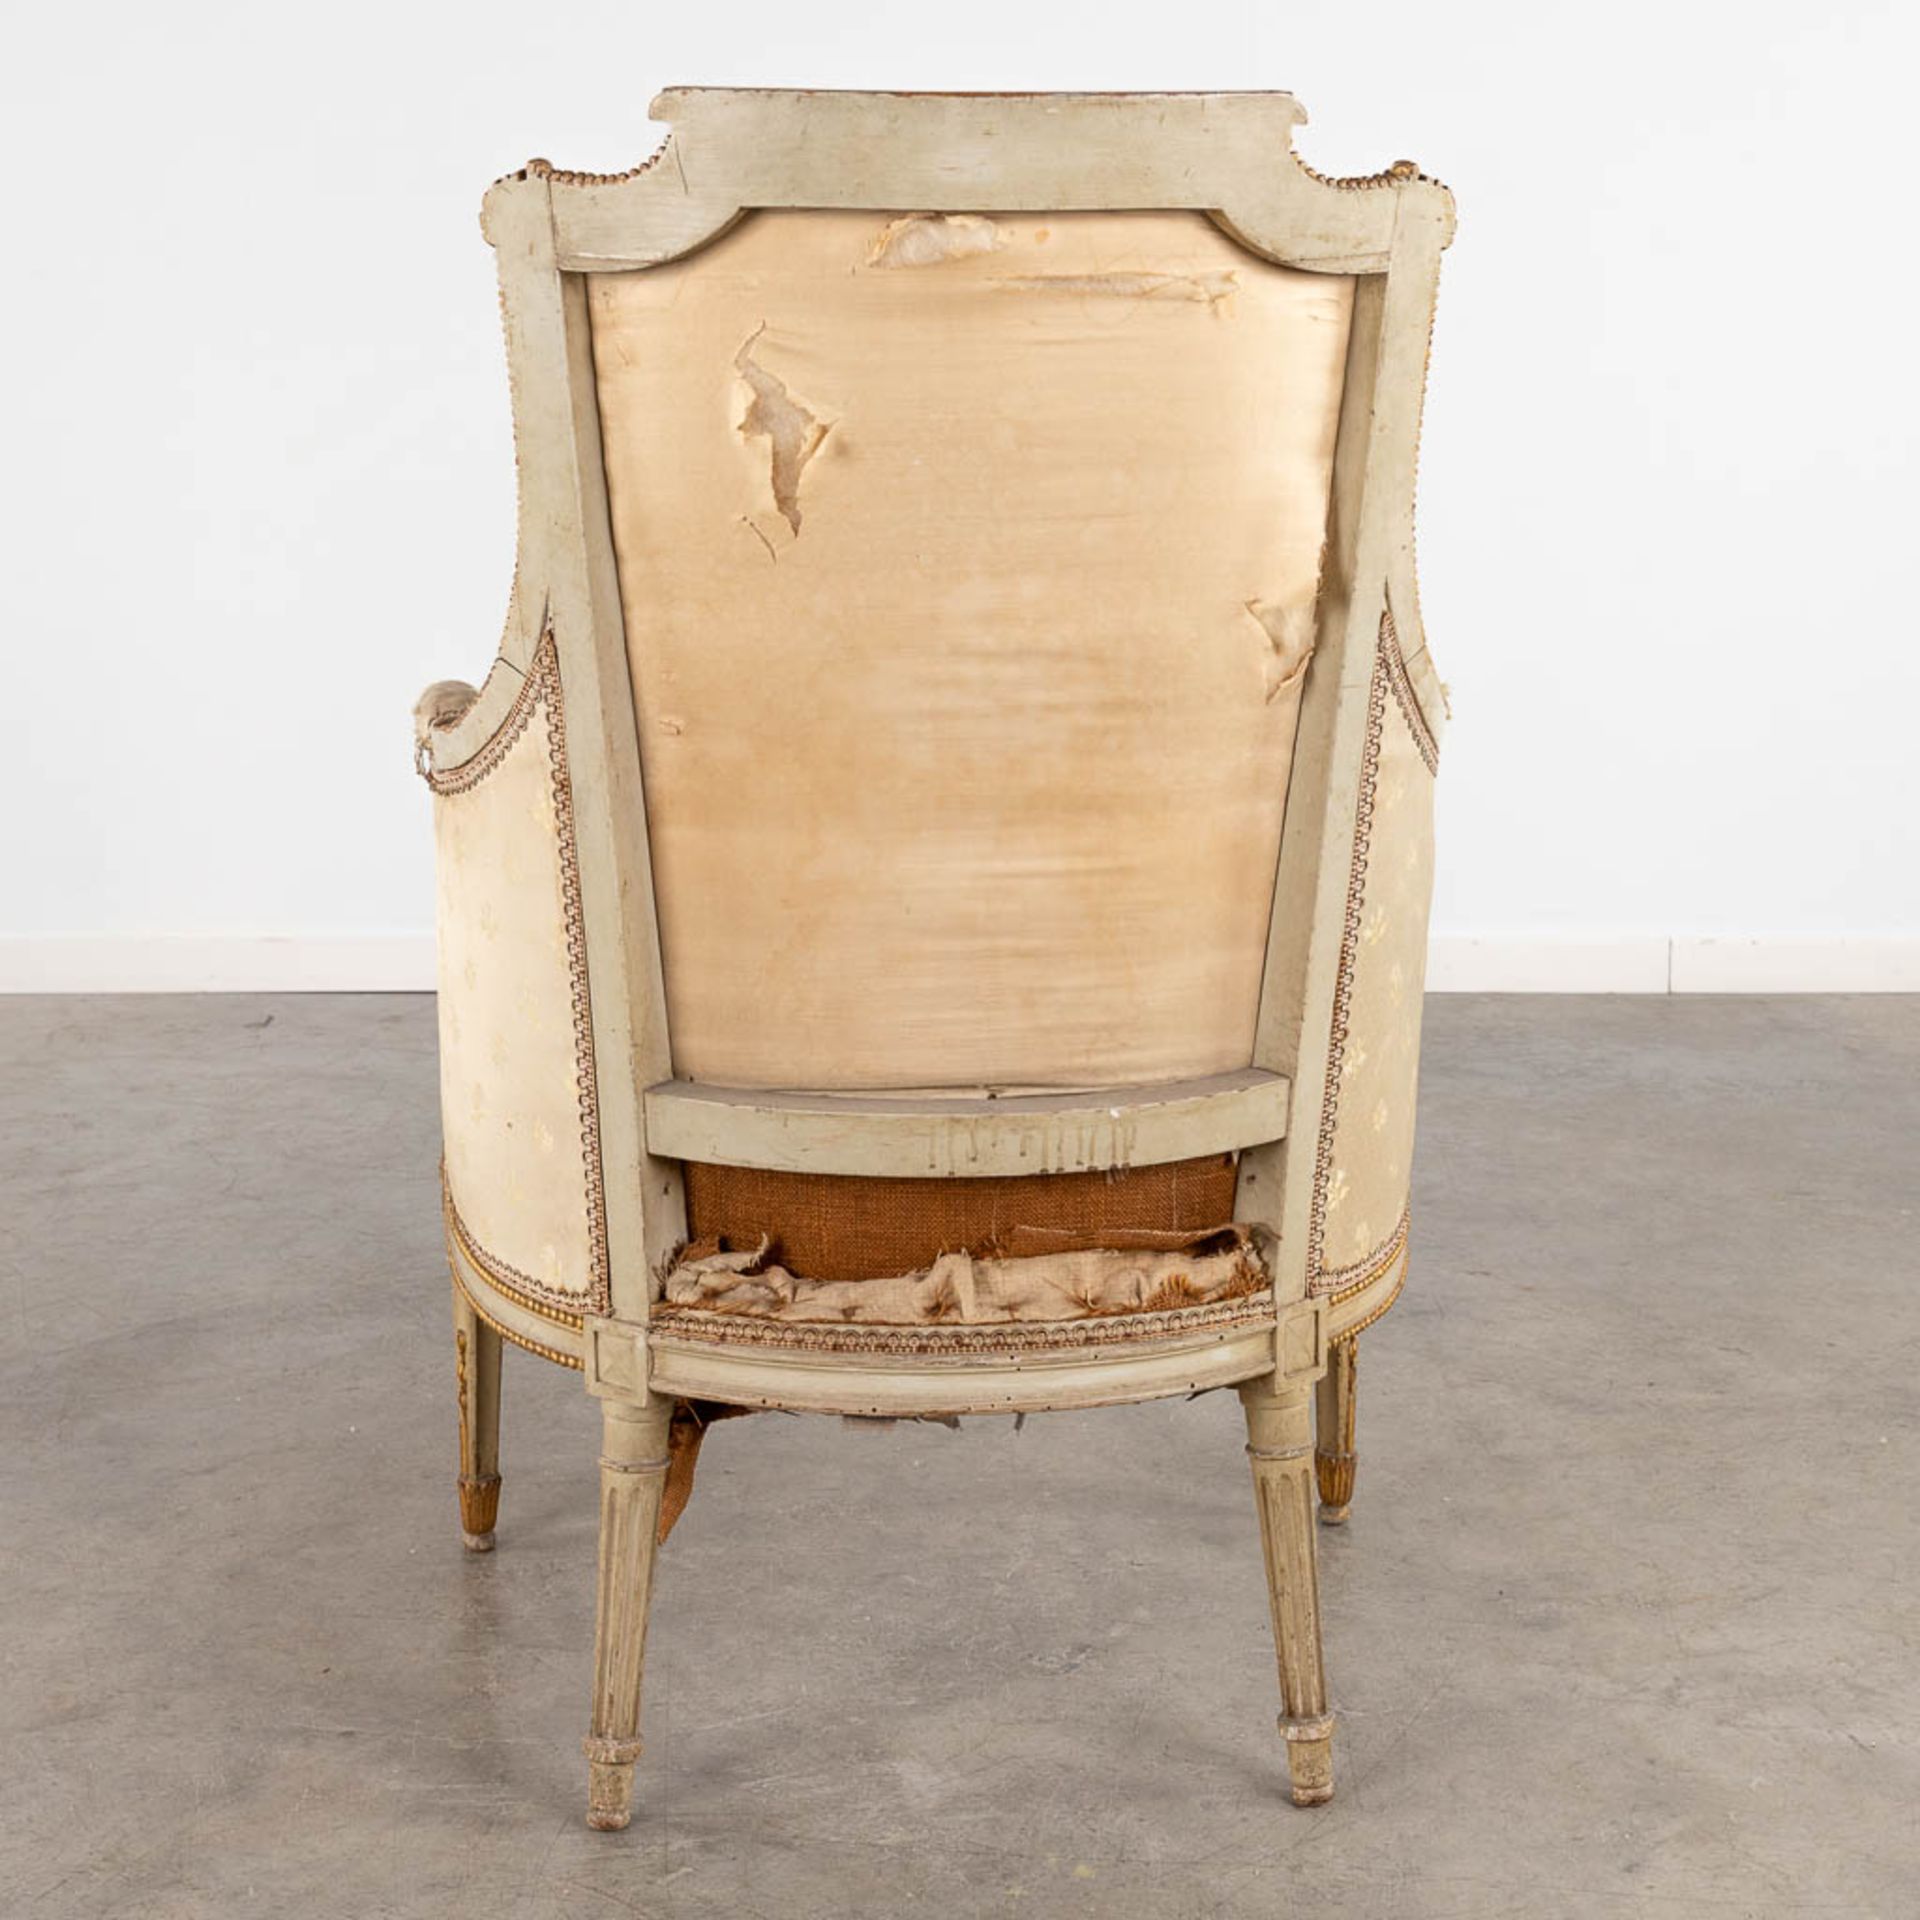 A sculptured armchair, Louis XVI style, 19th C. (D:64 x W:65 x H:100 cm) - Image 6 of 16